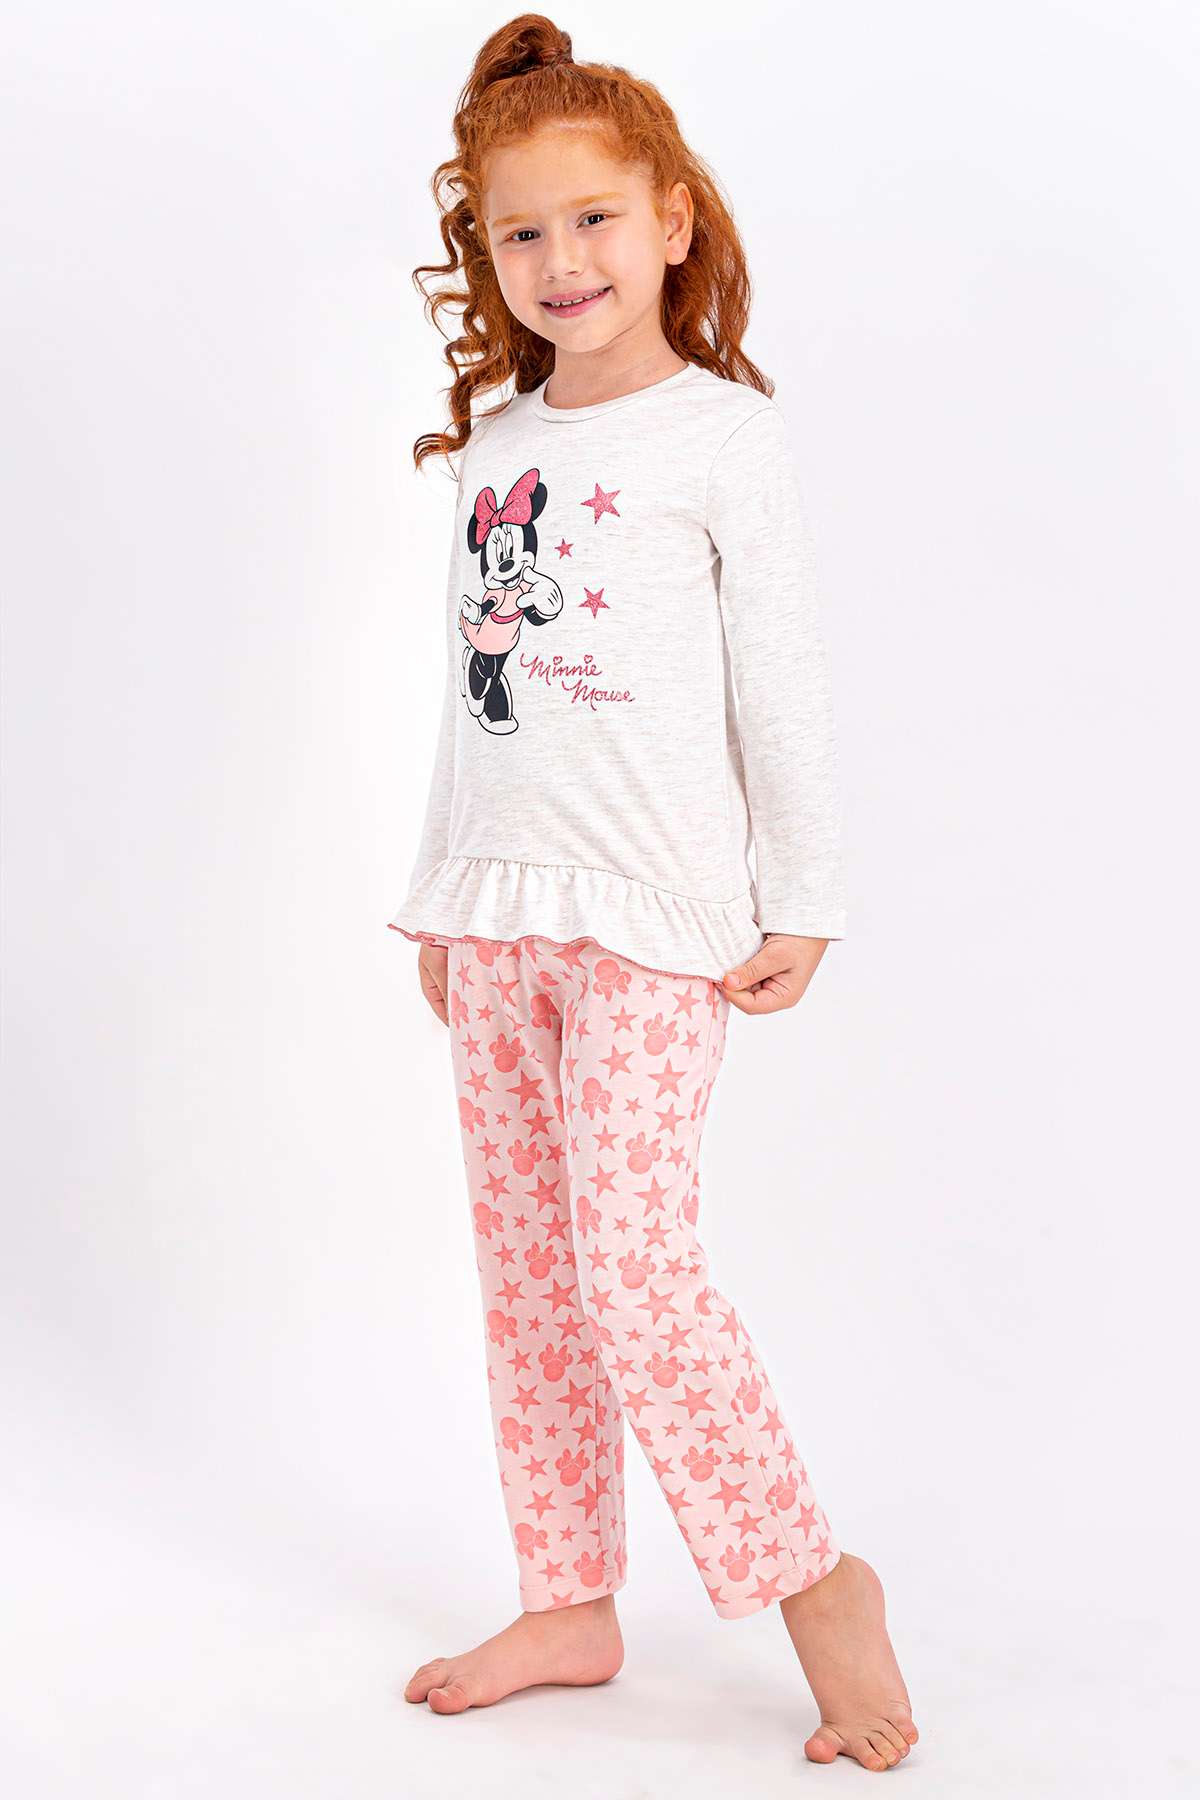 Minnie Mouse - Minnie Mouse Lisanslı Kremmelanj Kız Çocuk Pijama Takımı